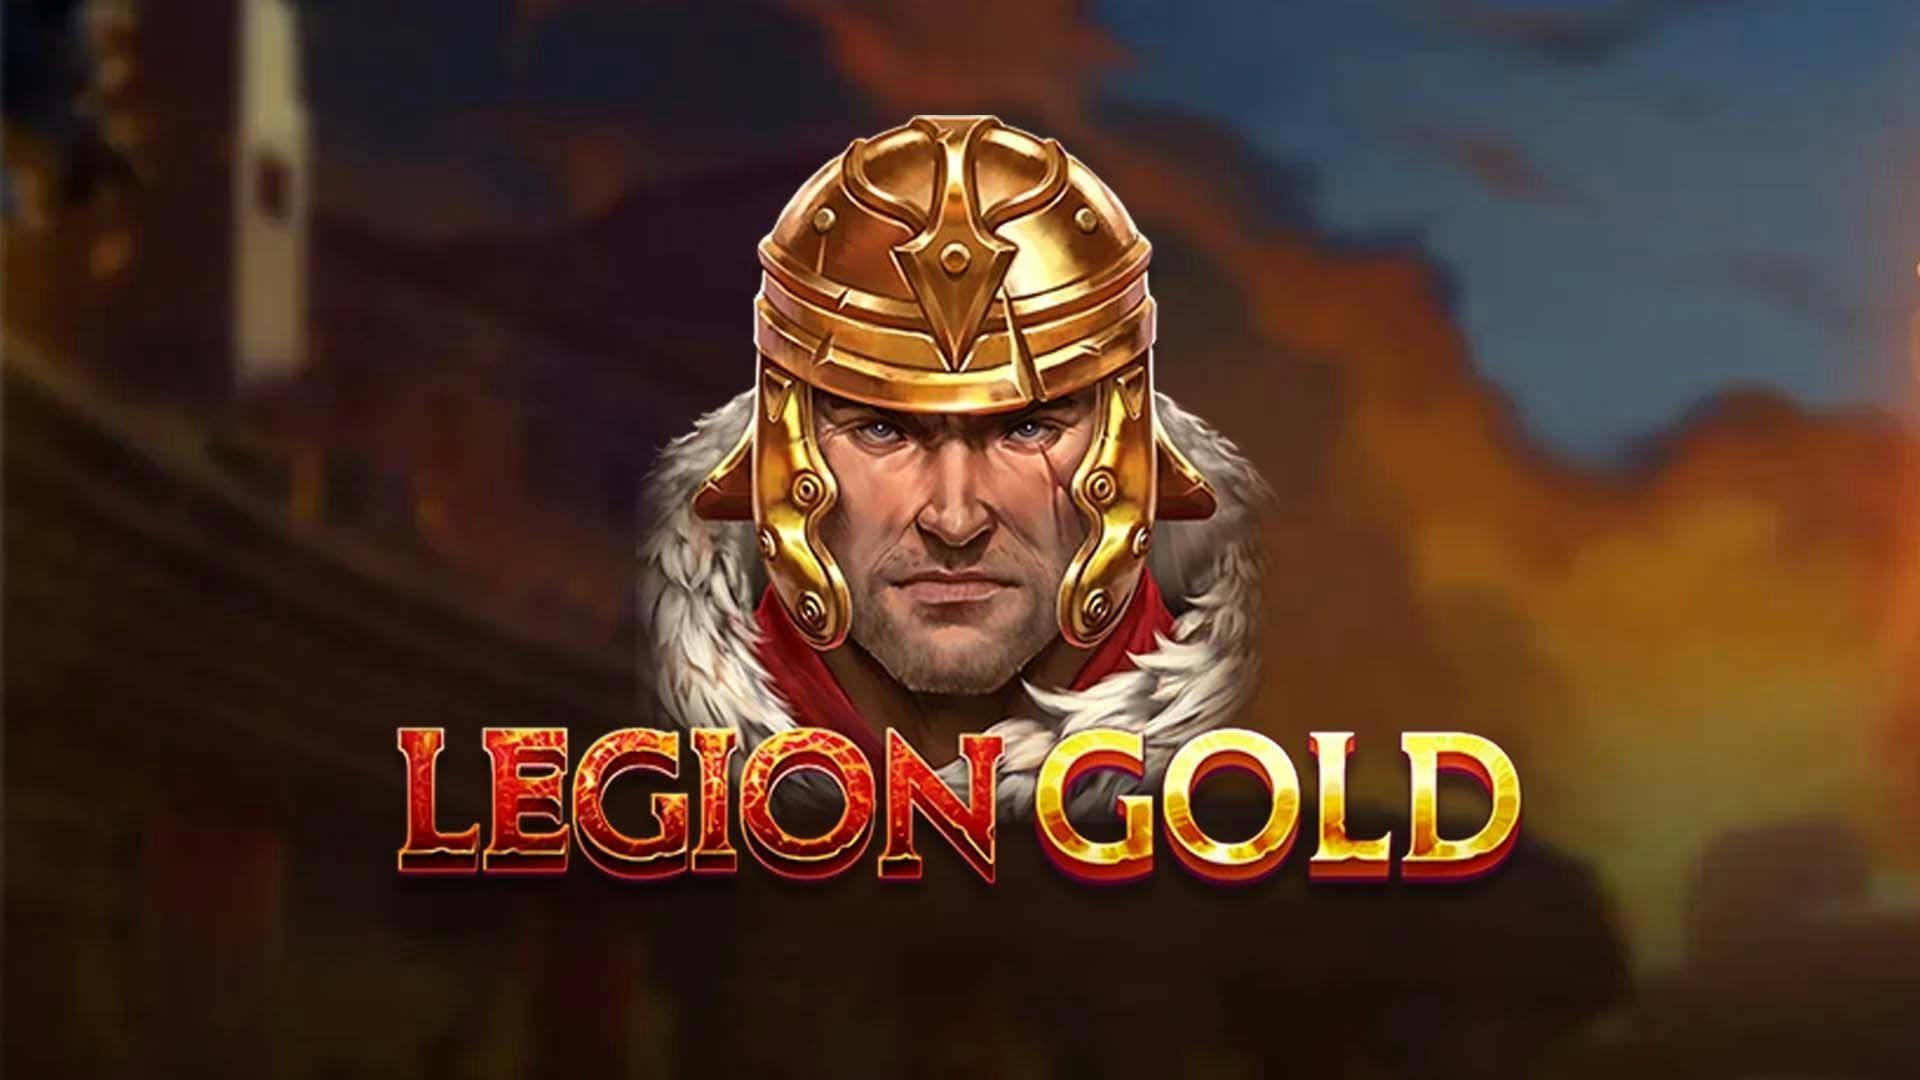 Legion Gold Slot Machine Online Free Game Play